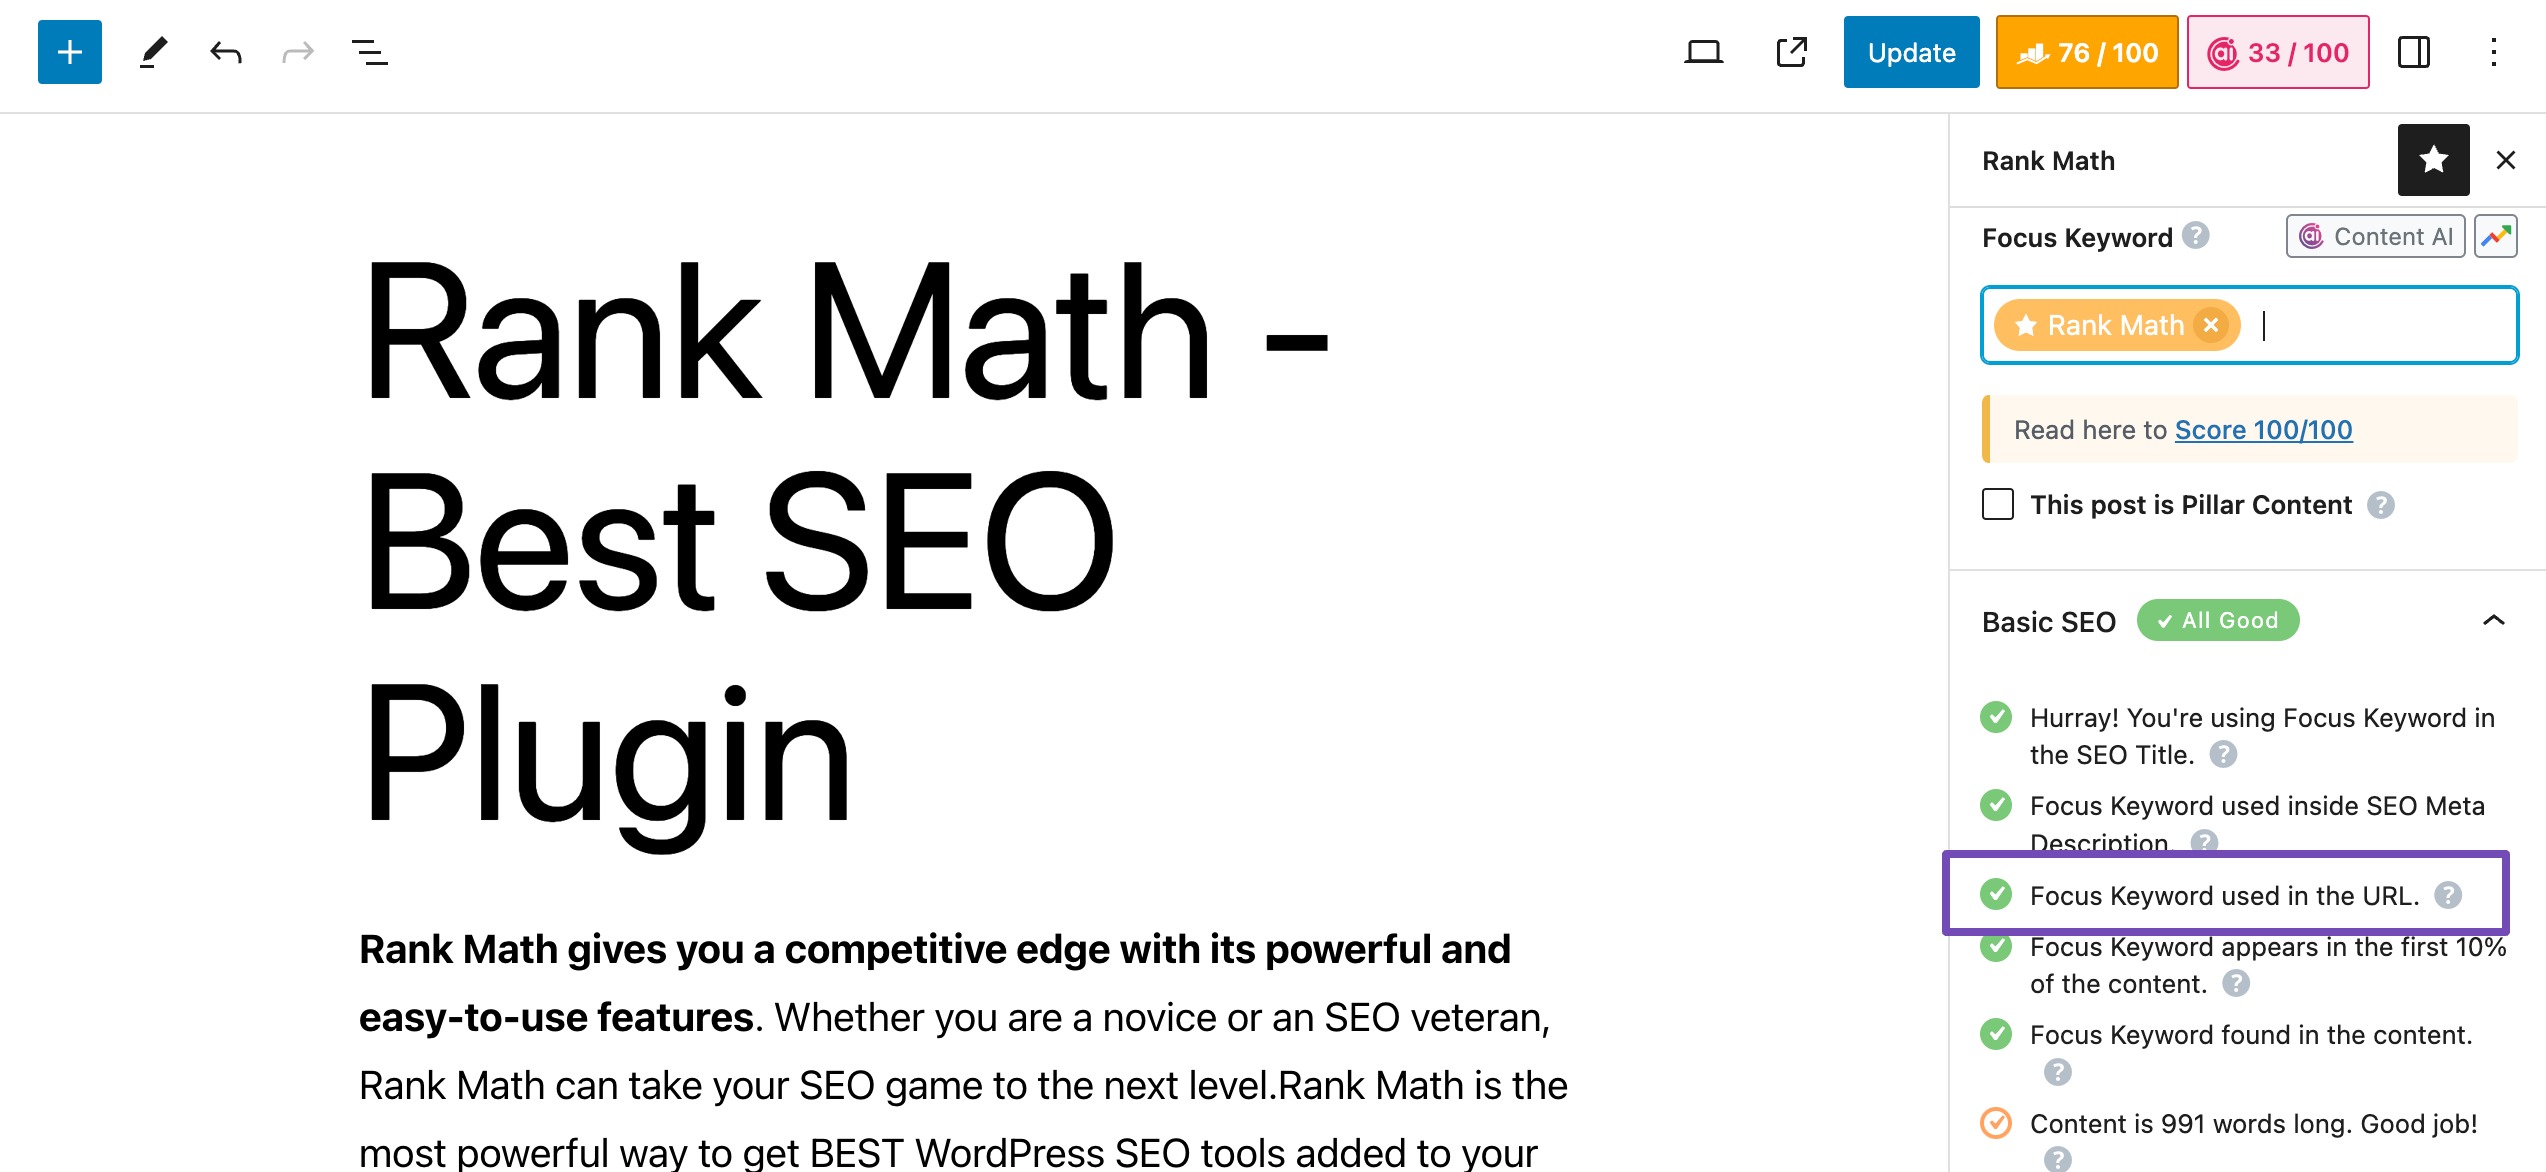 Rank Math's focus keyword in URL test